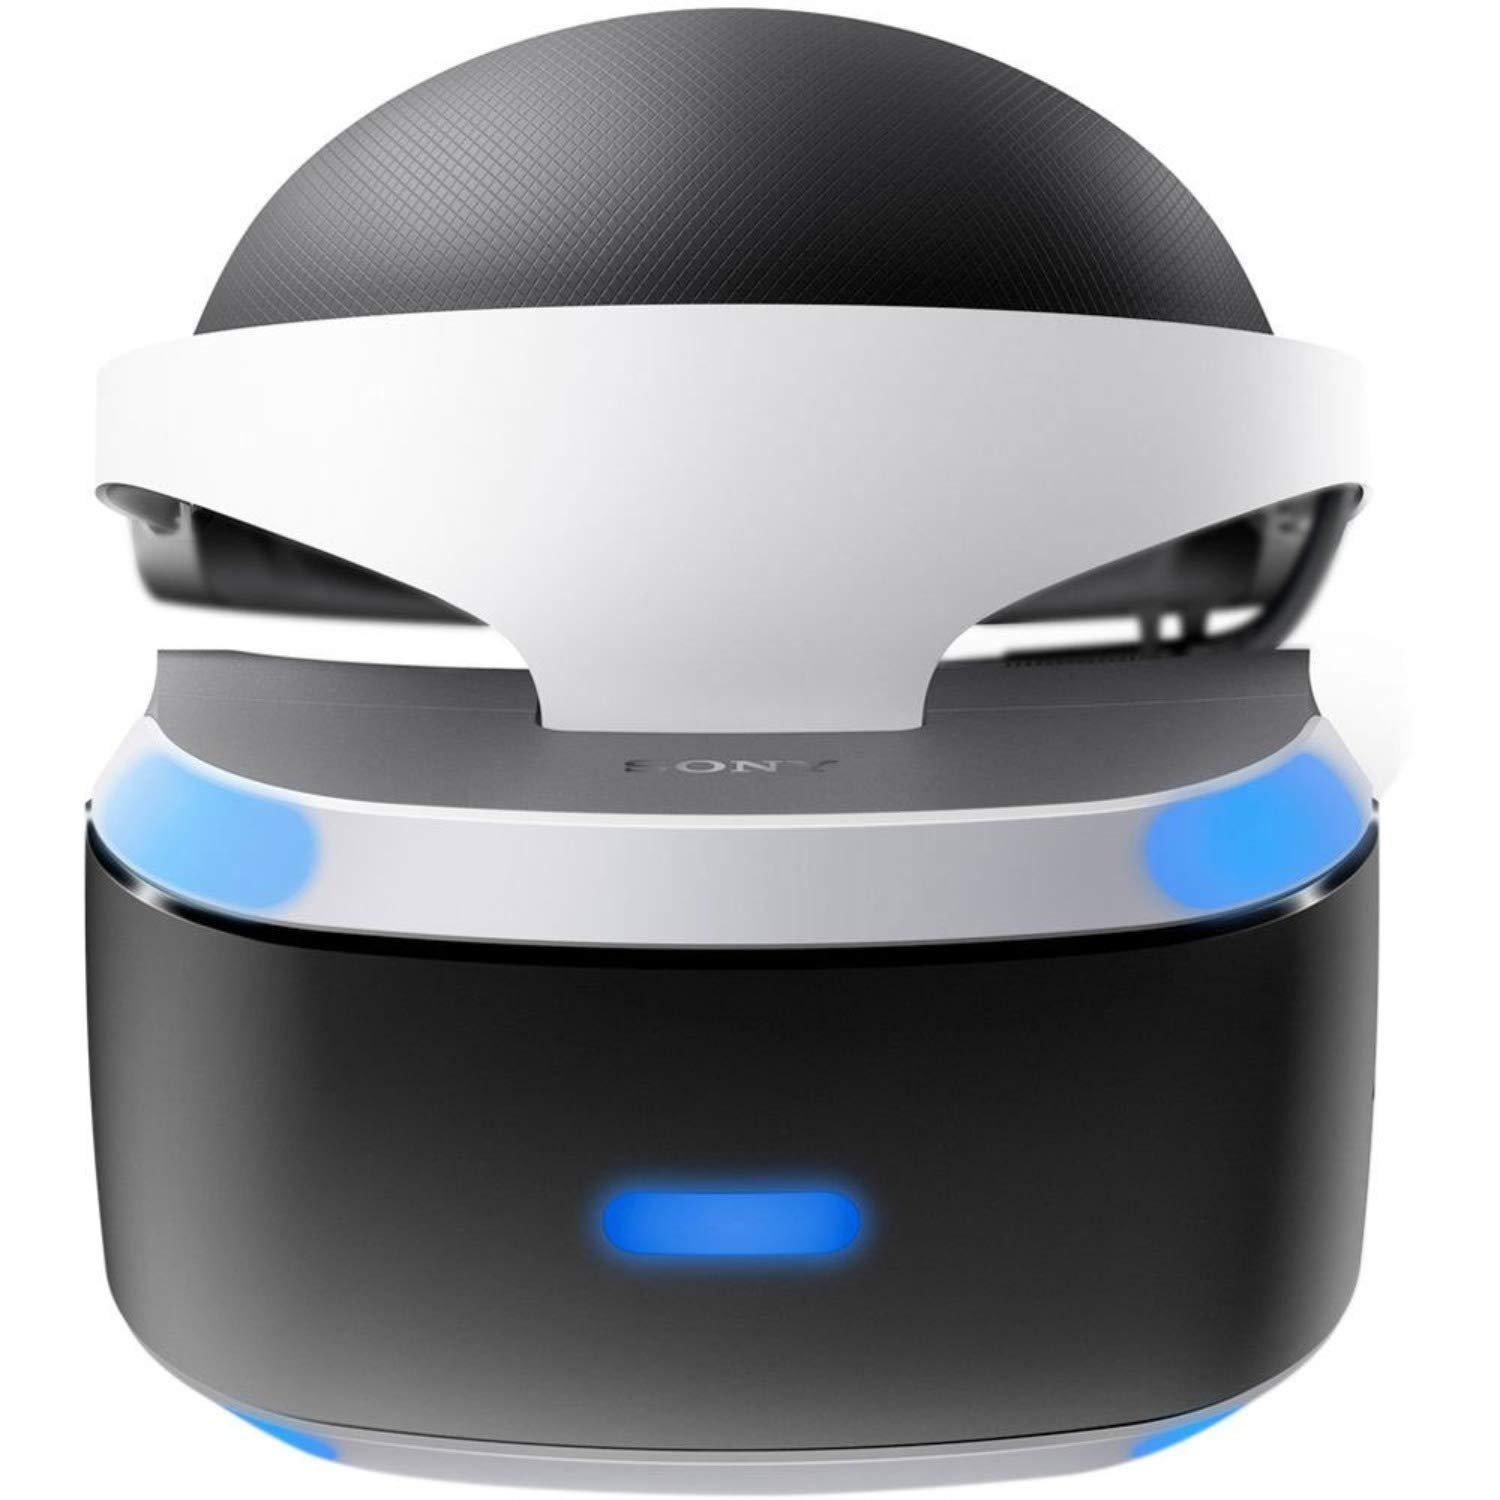 Sony PlayStation VR Headset GameStop Premium Refurbished